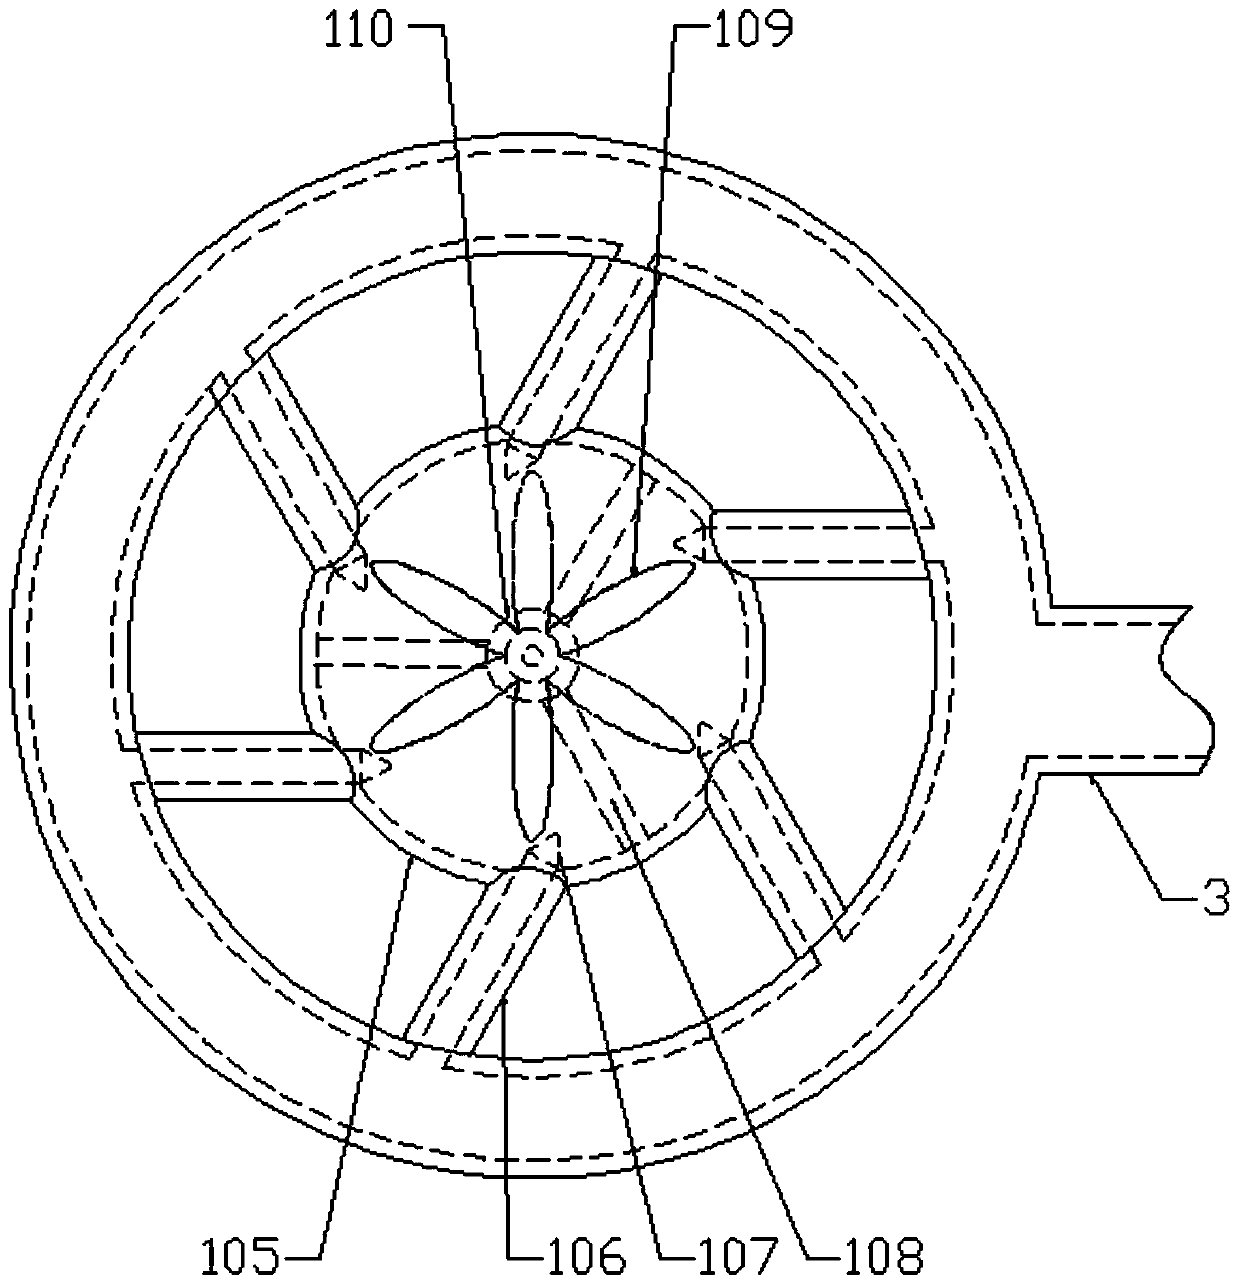 Venturi tube used in plate type absorption tower